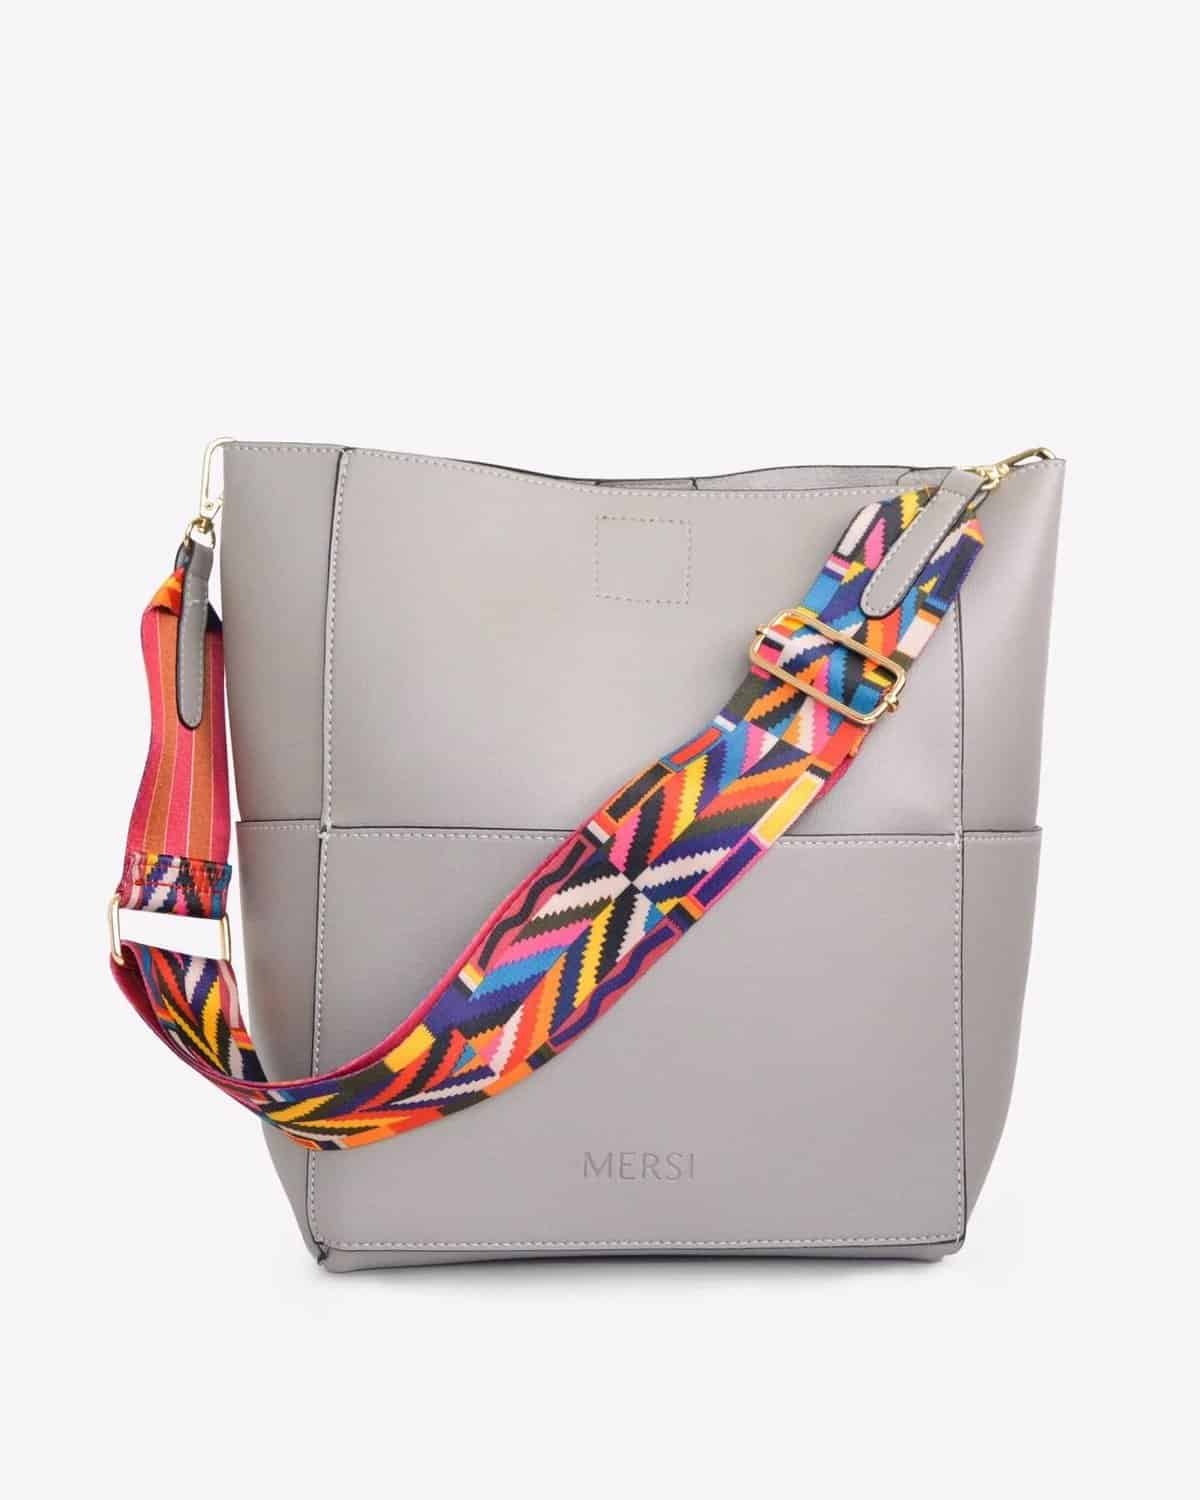 Gray Mersi bucket handbag with colorful patterned strap